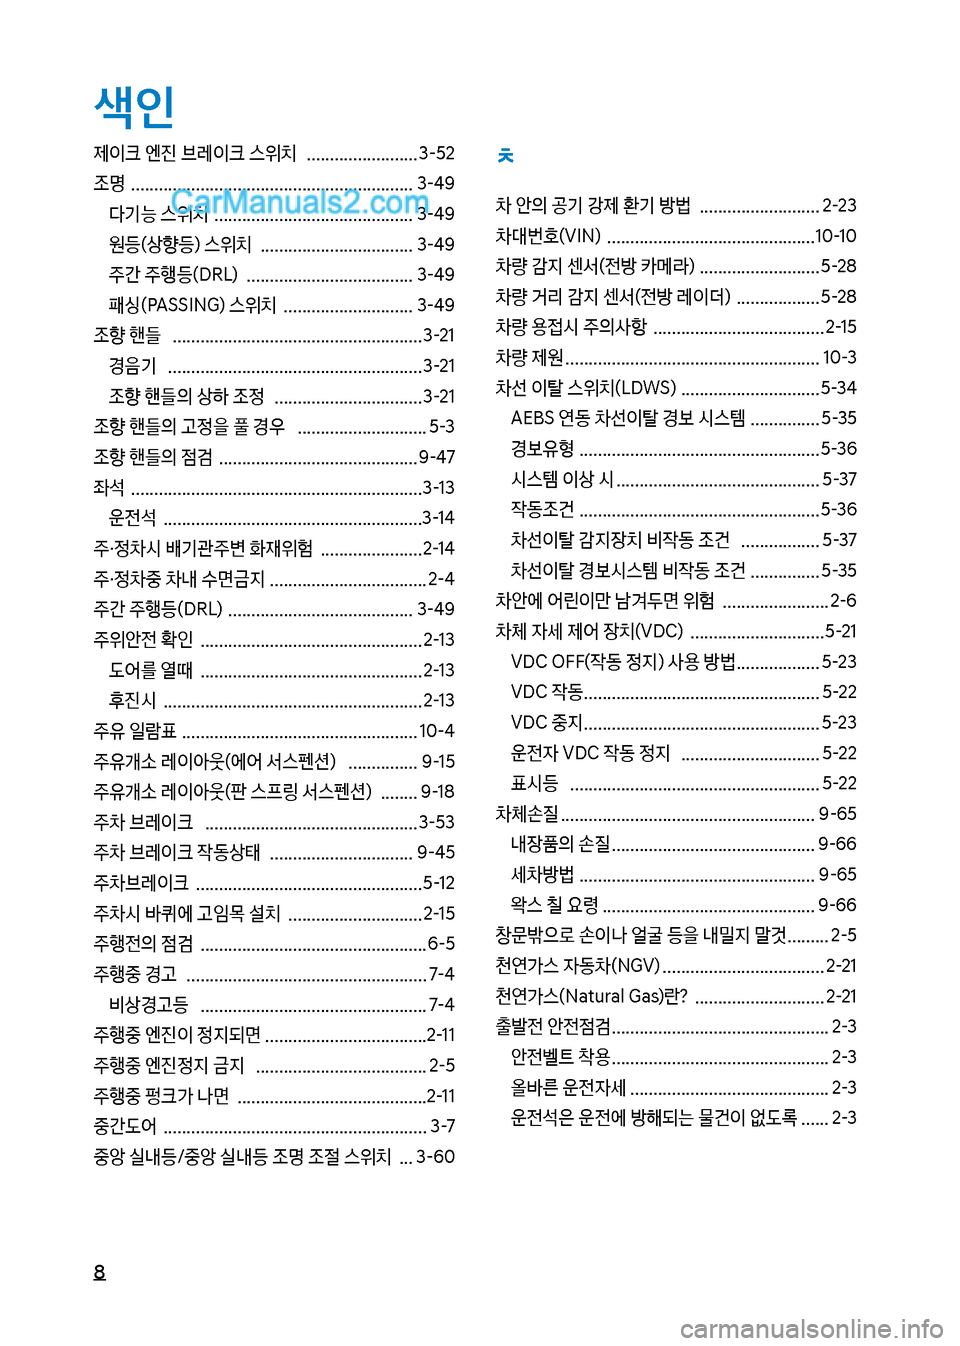 Hyundai New County 2017  뉴카운티 - 사용 설명서 (in Korean) 색인
8

